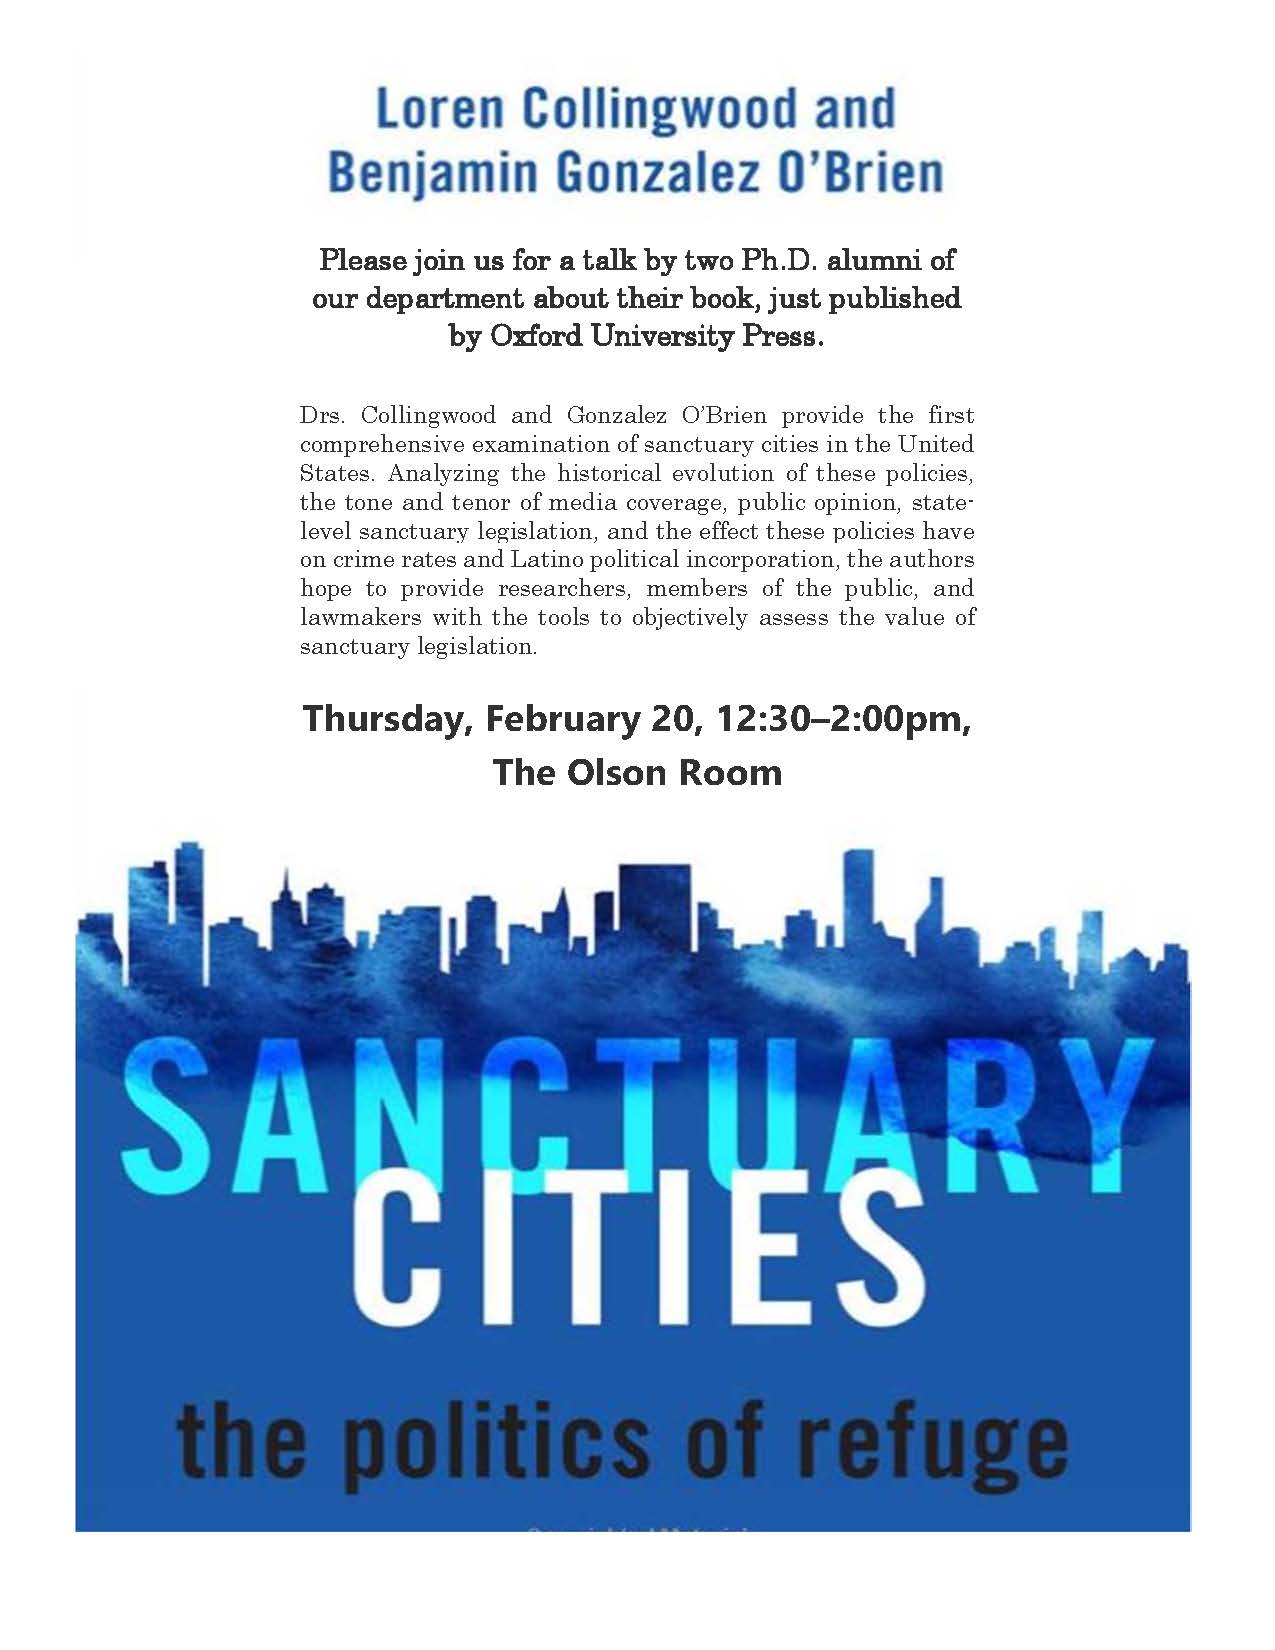 Sanctuary Cities: The Politics of Refuge